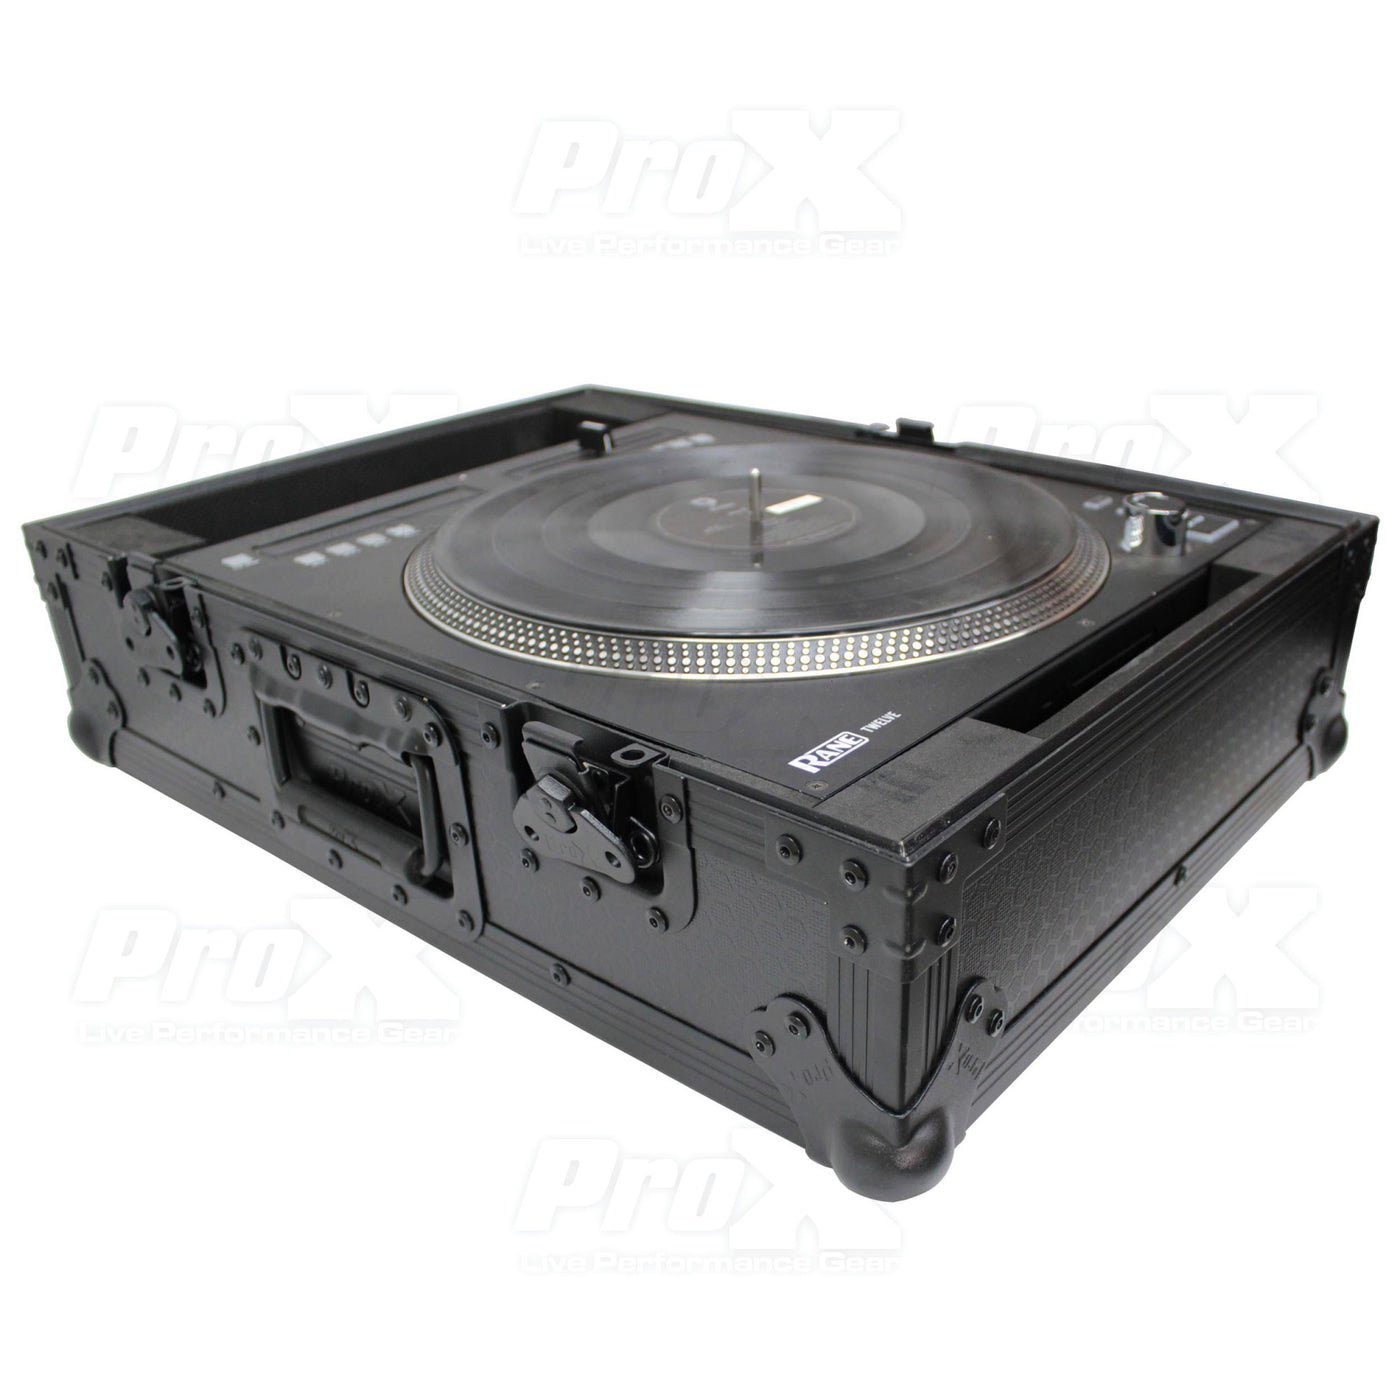 ProX XS-RANE12BL ATA-300 Style Flight Case, For Rane 12 Motorized DJ Control System, Pro Audio Equipment Storage, Black on Black